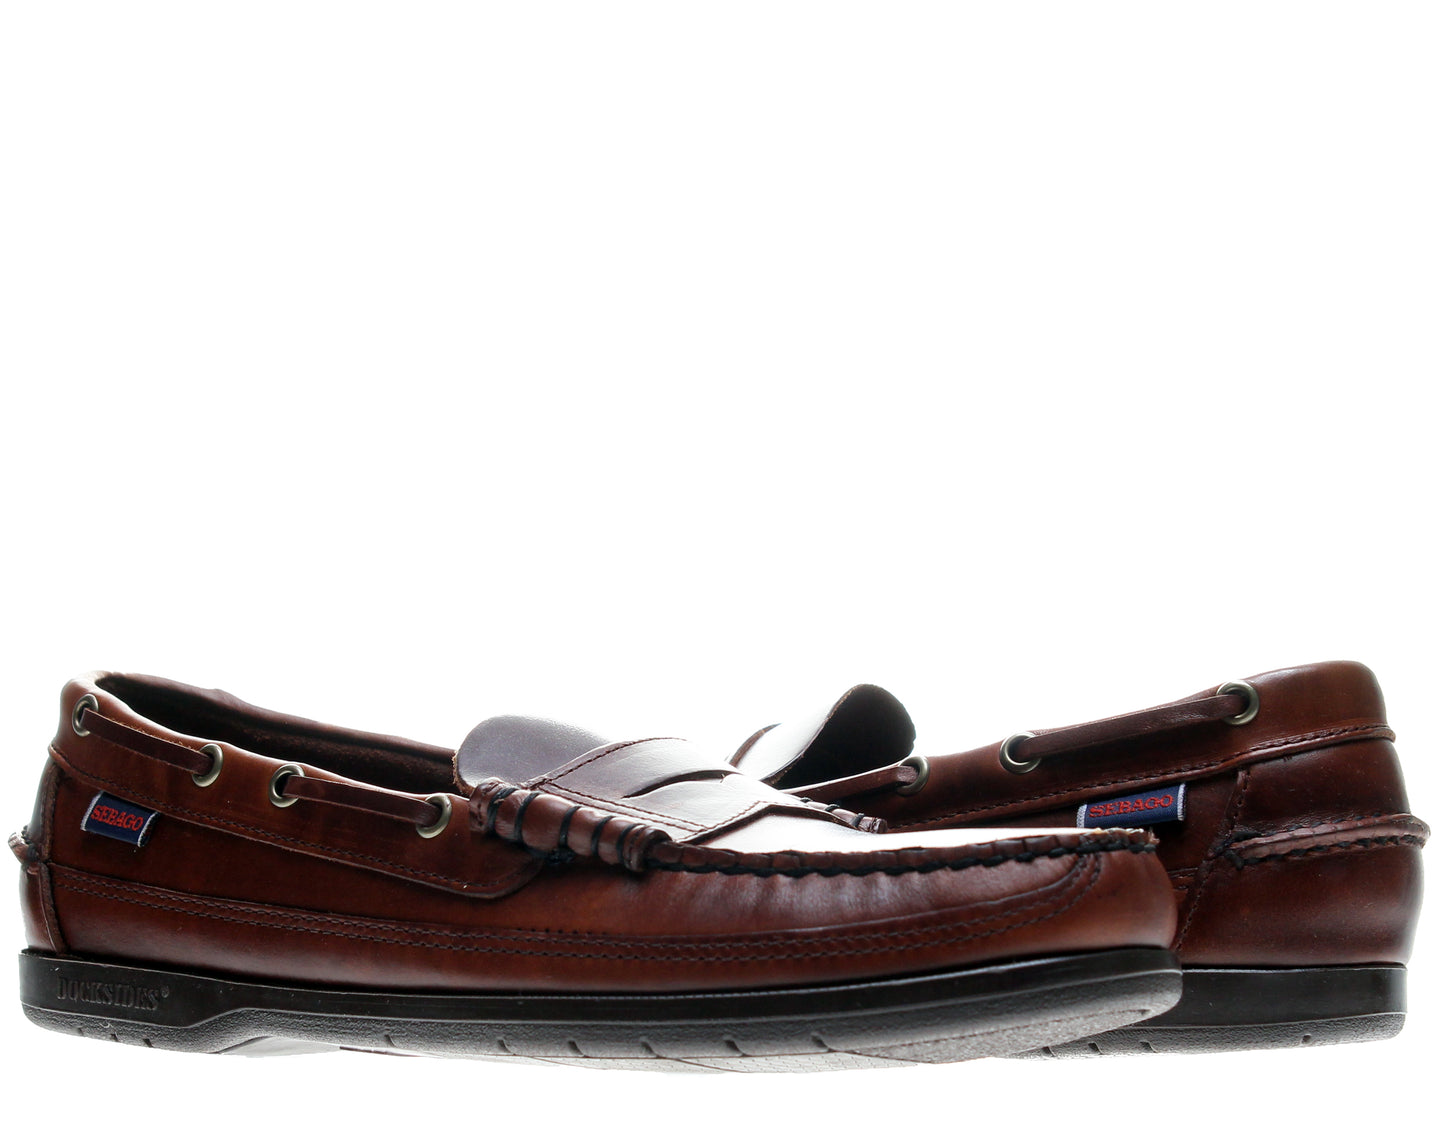 Sebago Sloop Men's Boat Shoes